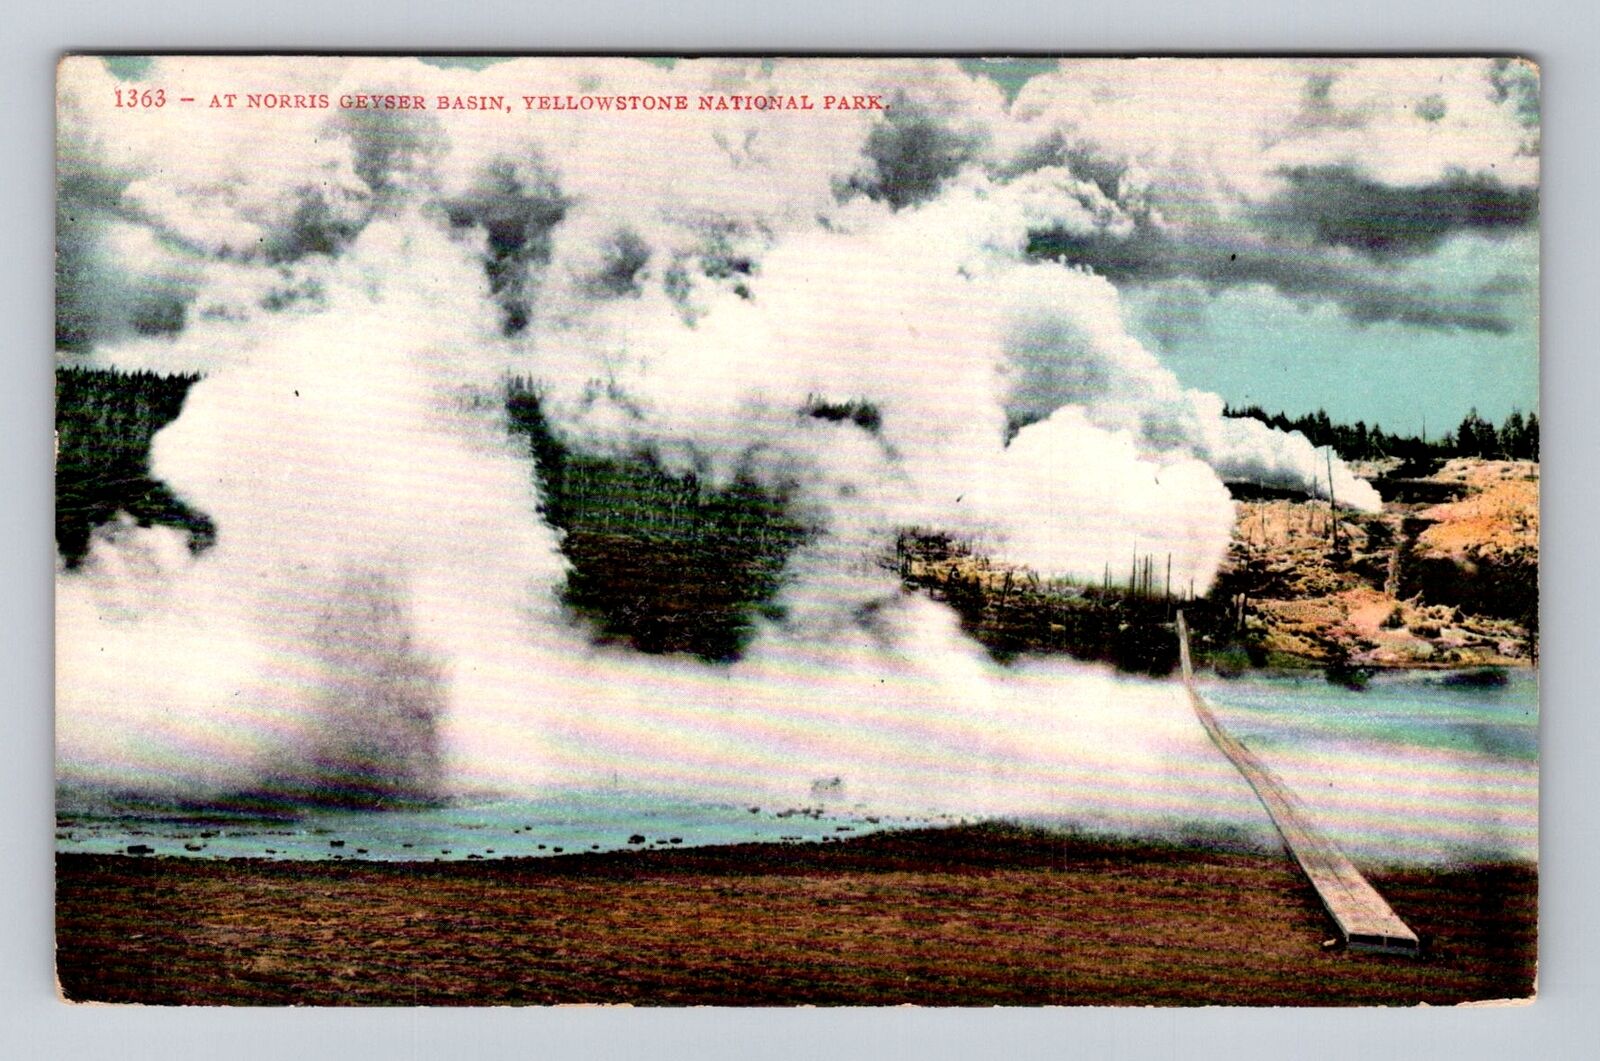 Yellowstone National Park, Norris Geyser Basin, Series #1363 Vintage Postcard